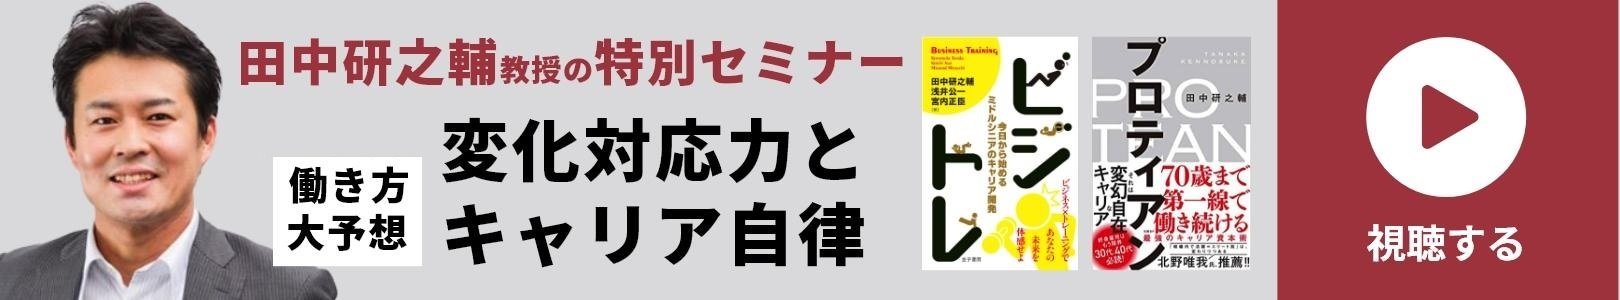 banner変化対応力とキャリア自律.jpg